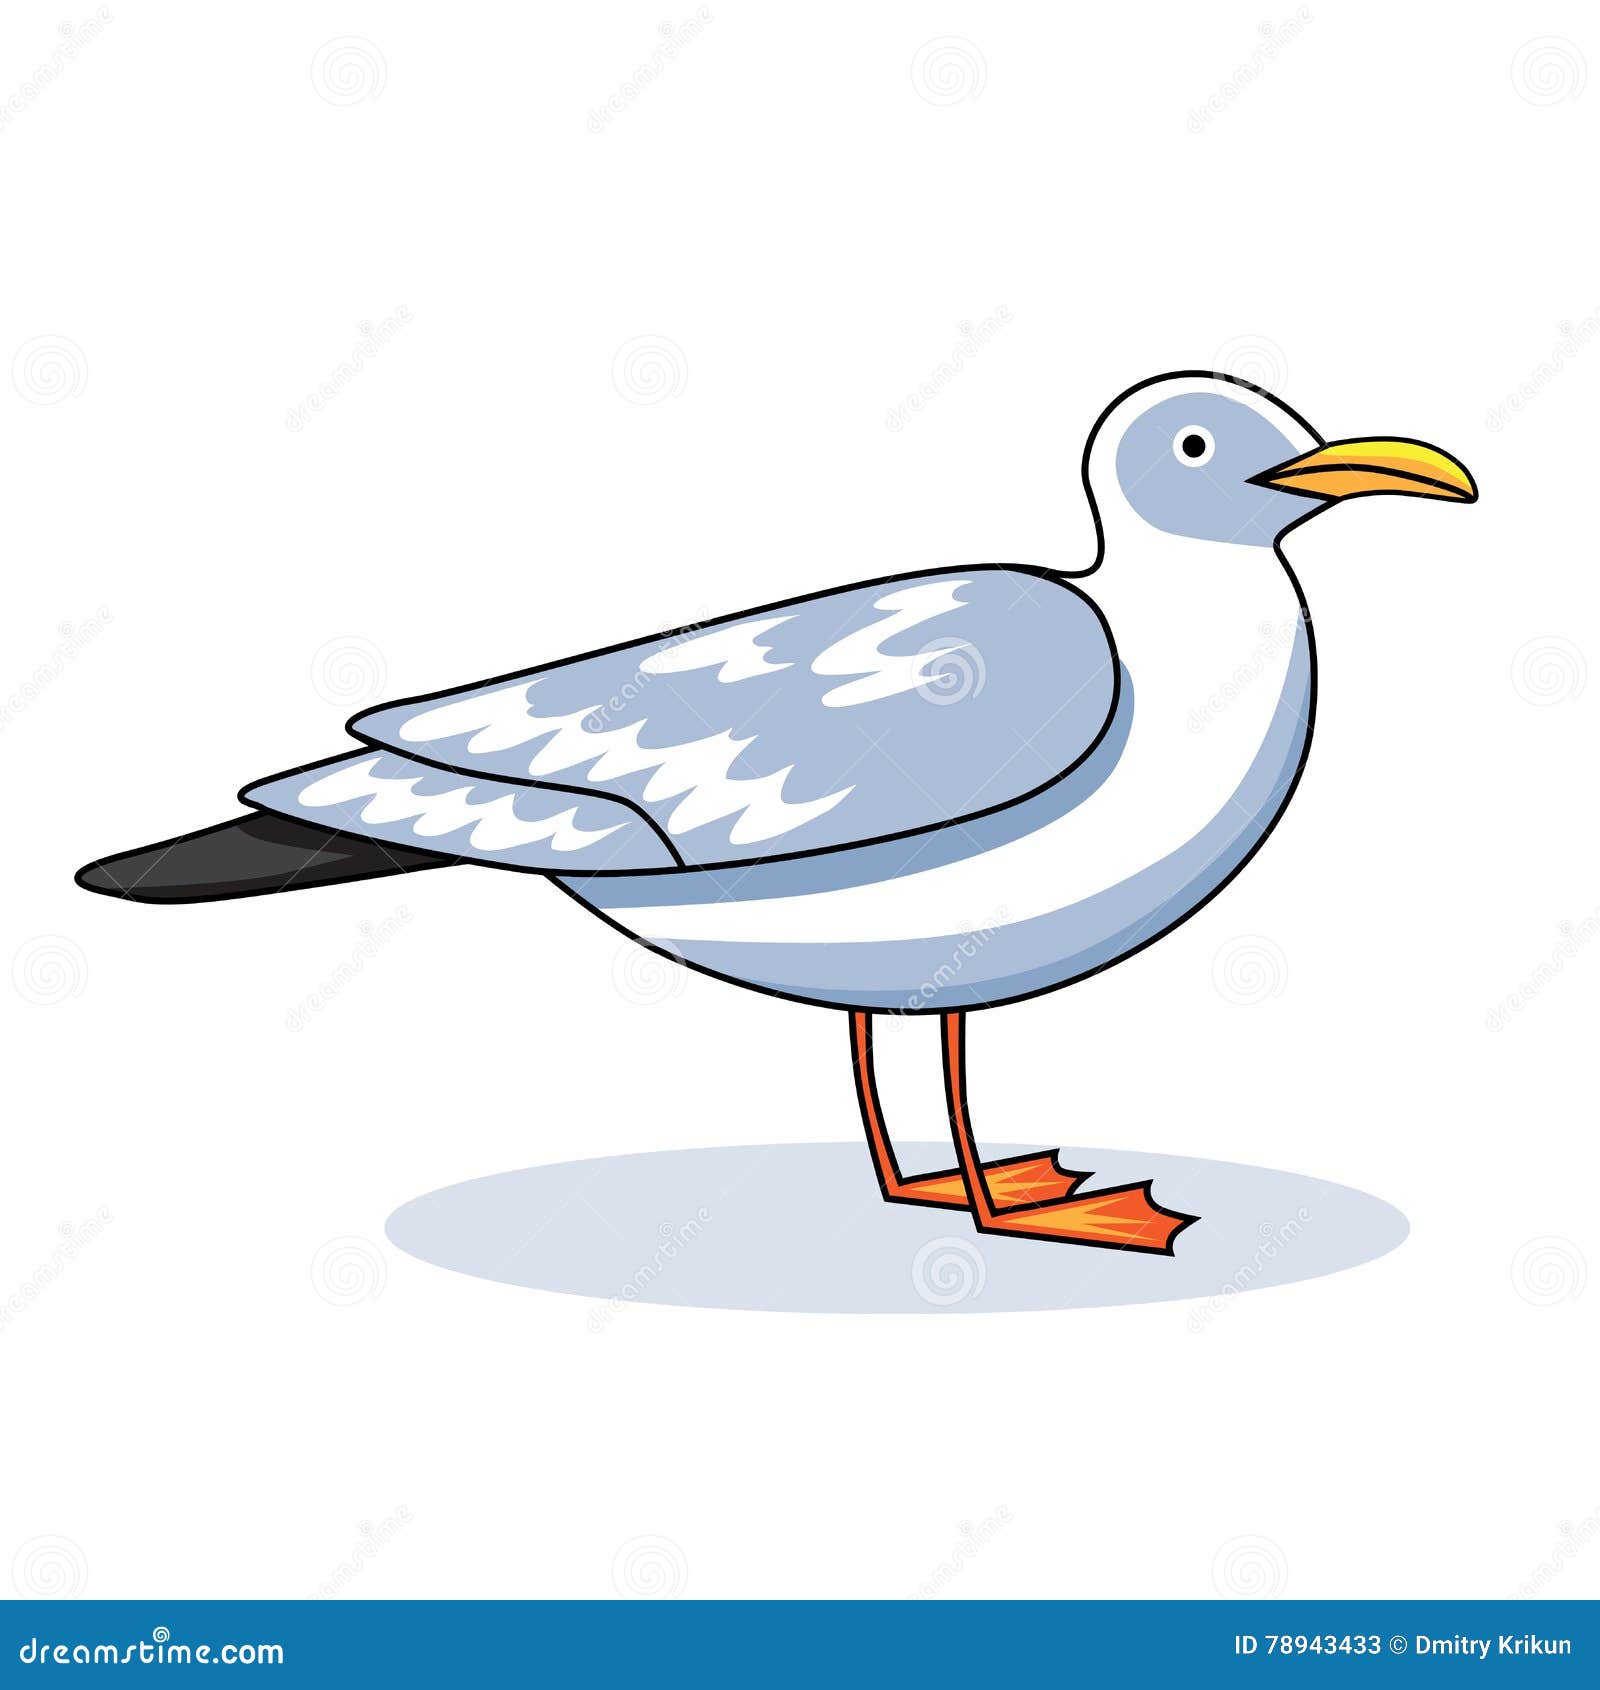 gull flight bird and seabird gull. ÃÂ¡artoon looking gull. sea gull, on white background. herring gull for your journal